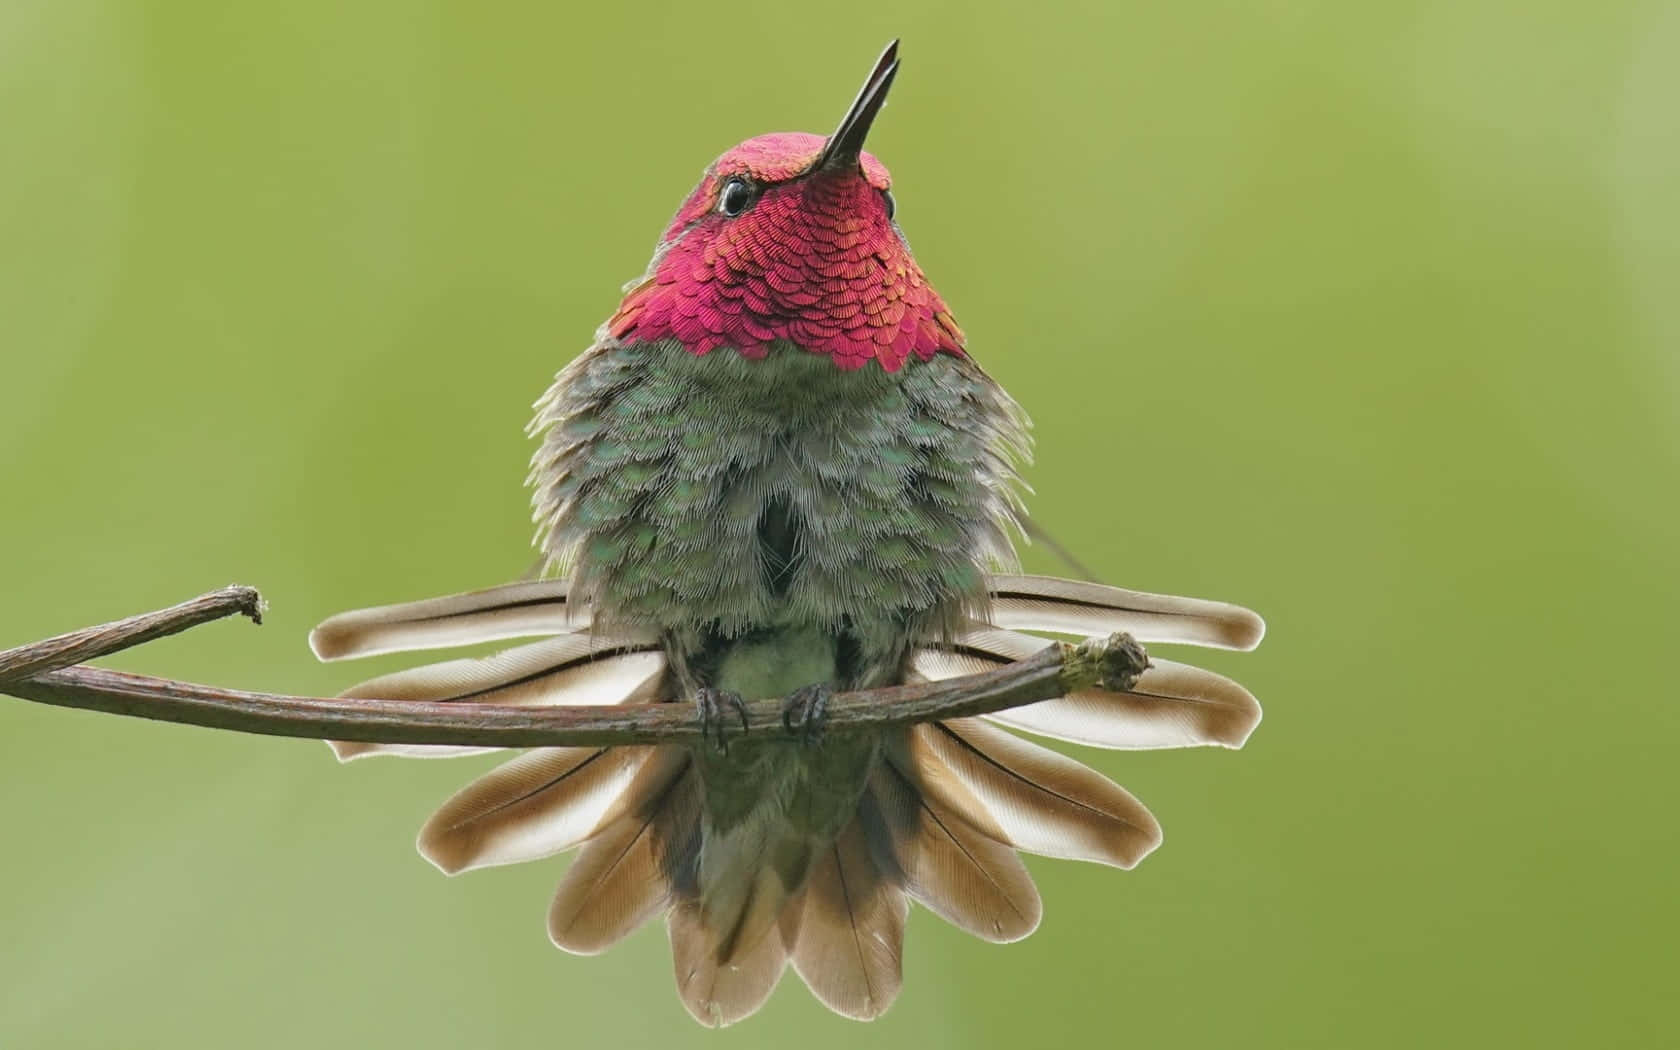 "A Female Hummingbird Feeding on Nectar"